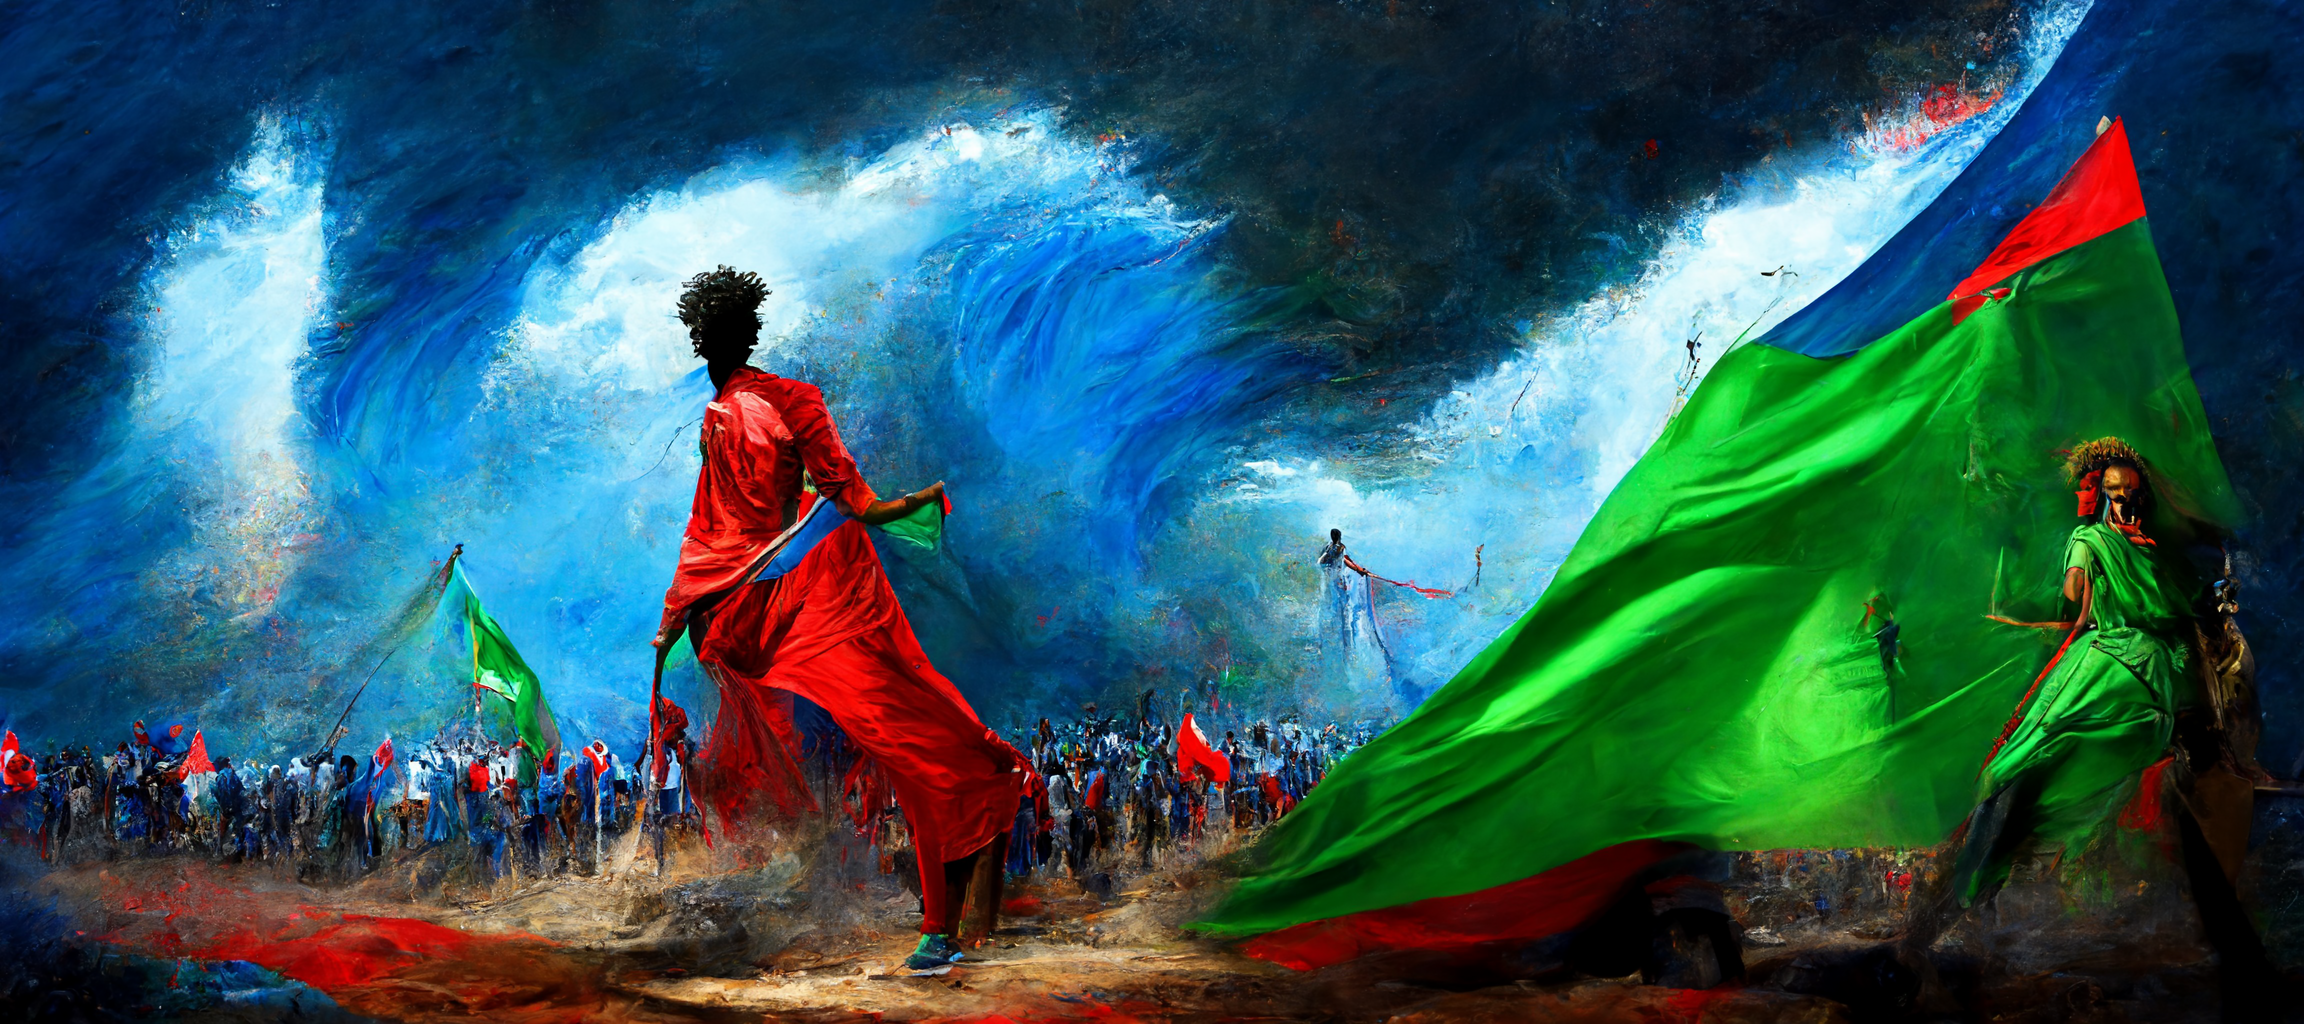 Emnet_eritrean_liberty_leading_the_people_painting_sea_of_red_c_6b7b56c6-5587-4eda-8840-f7625df394c1